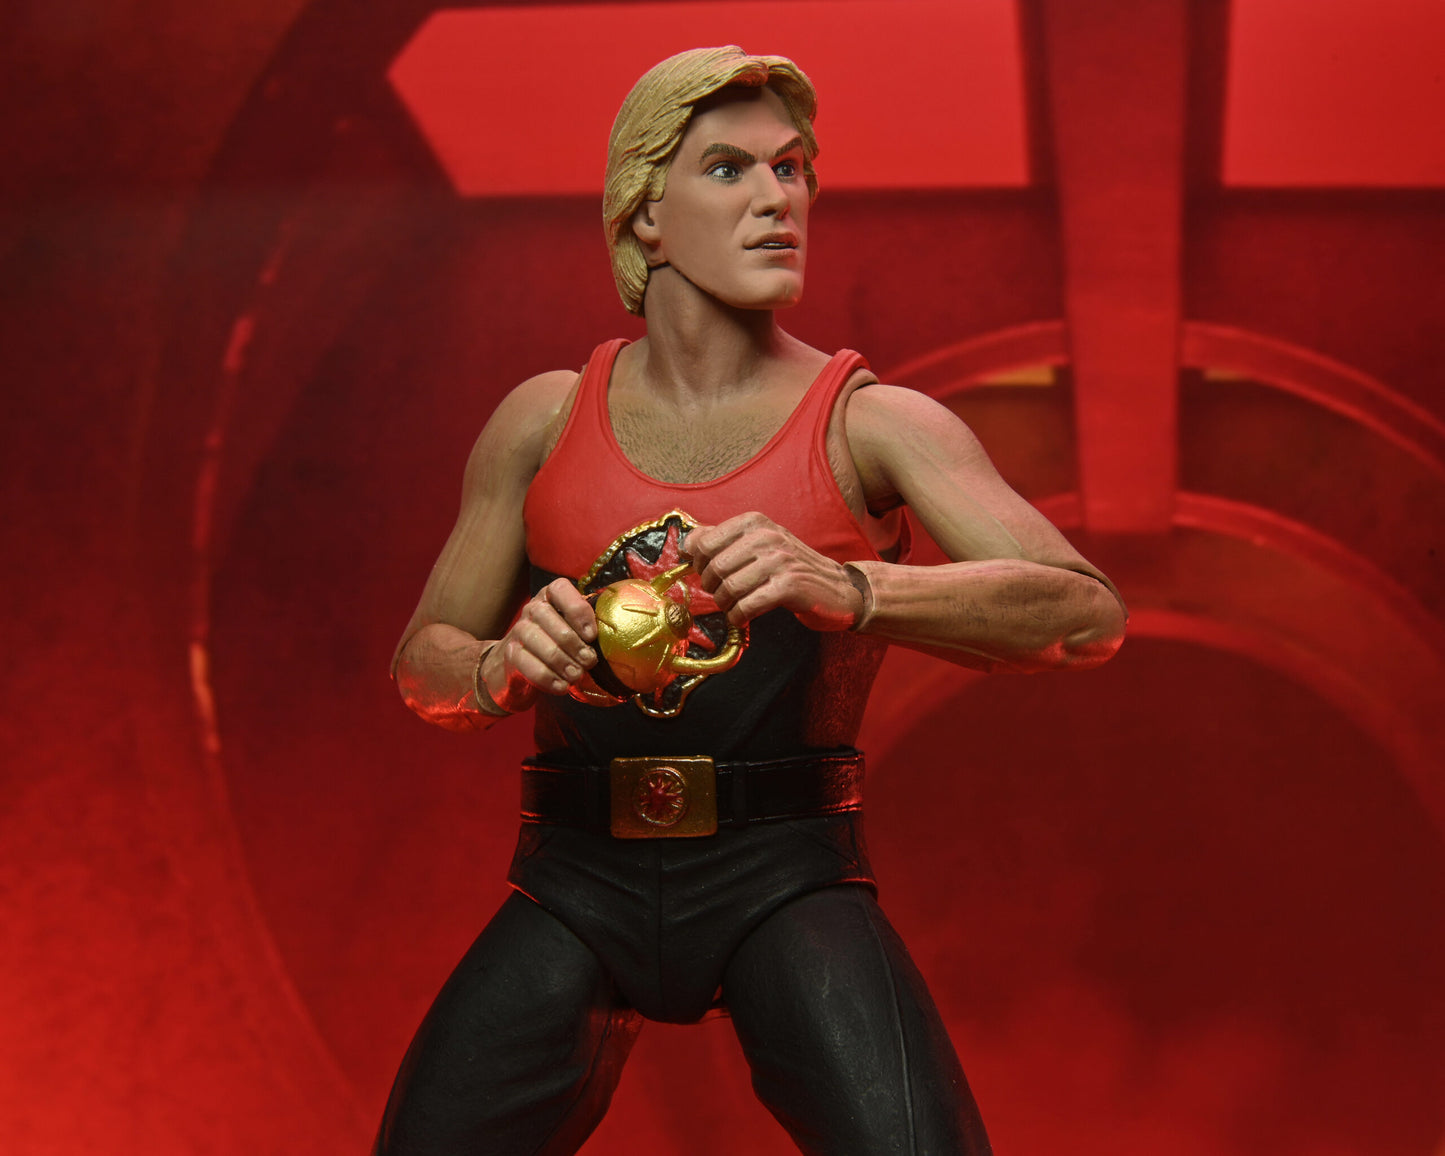 Flash Gordon (1980)

7” Scale Action Figure – Ultimate Flash Gordon (Final Battle)